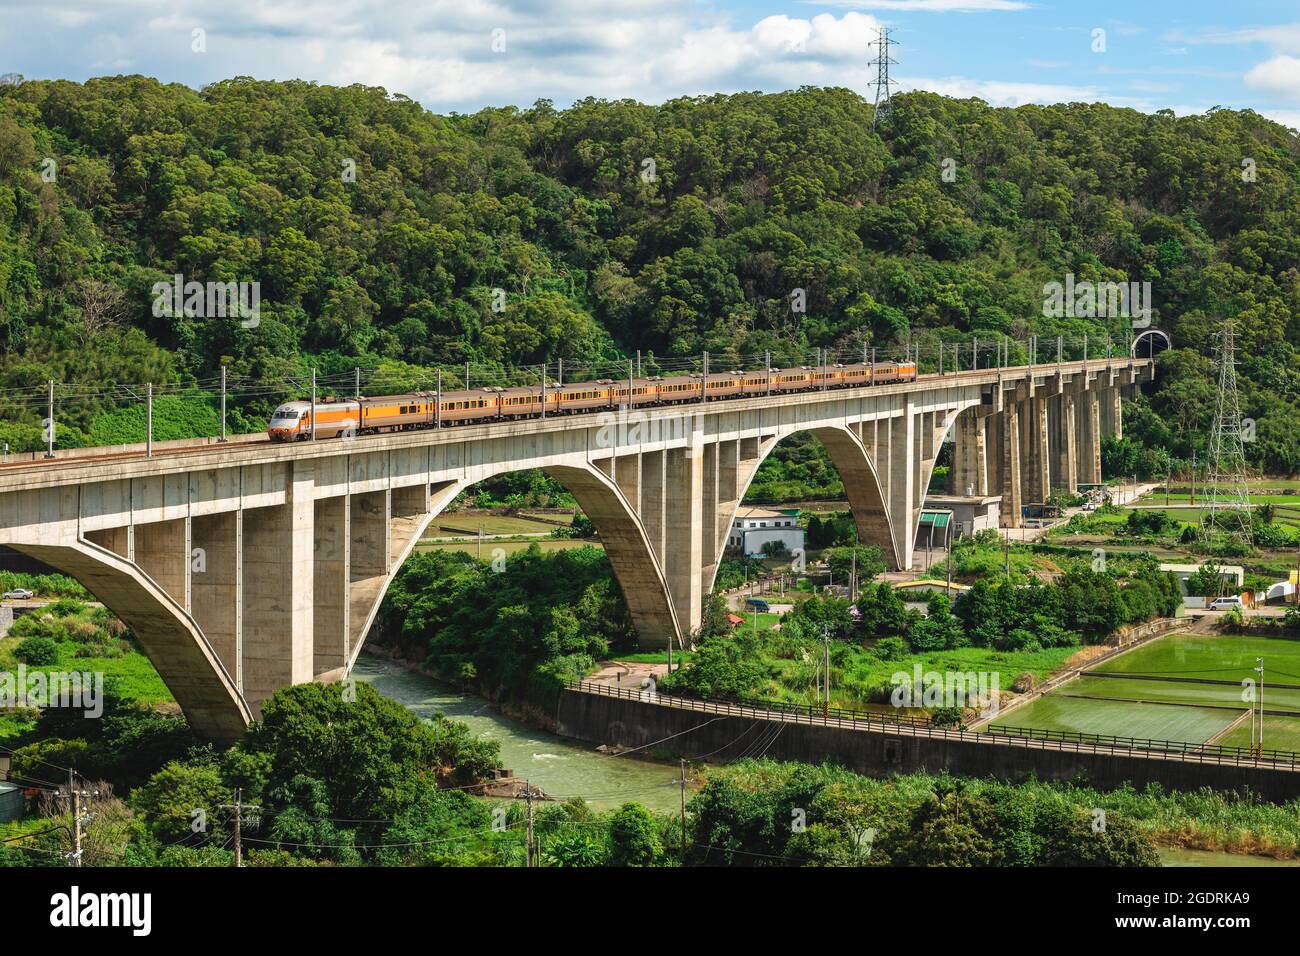 A train cross over liyutan arch bridge in miaoli, taiwan Stock Photo